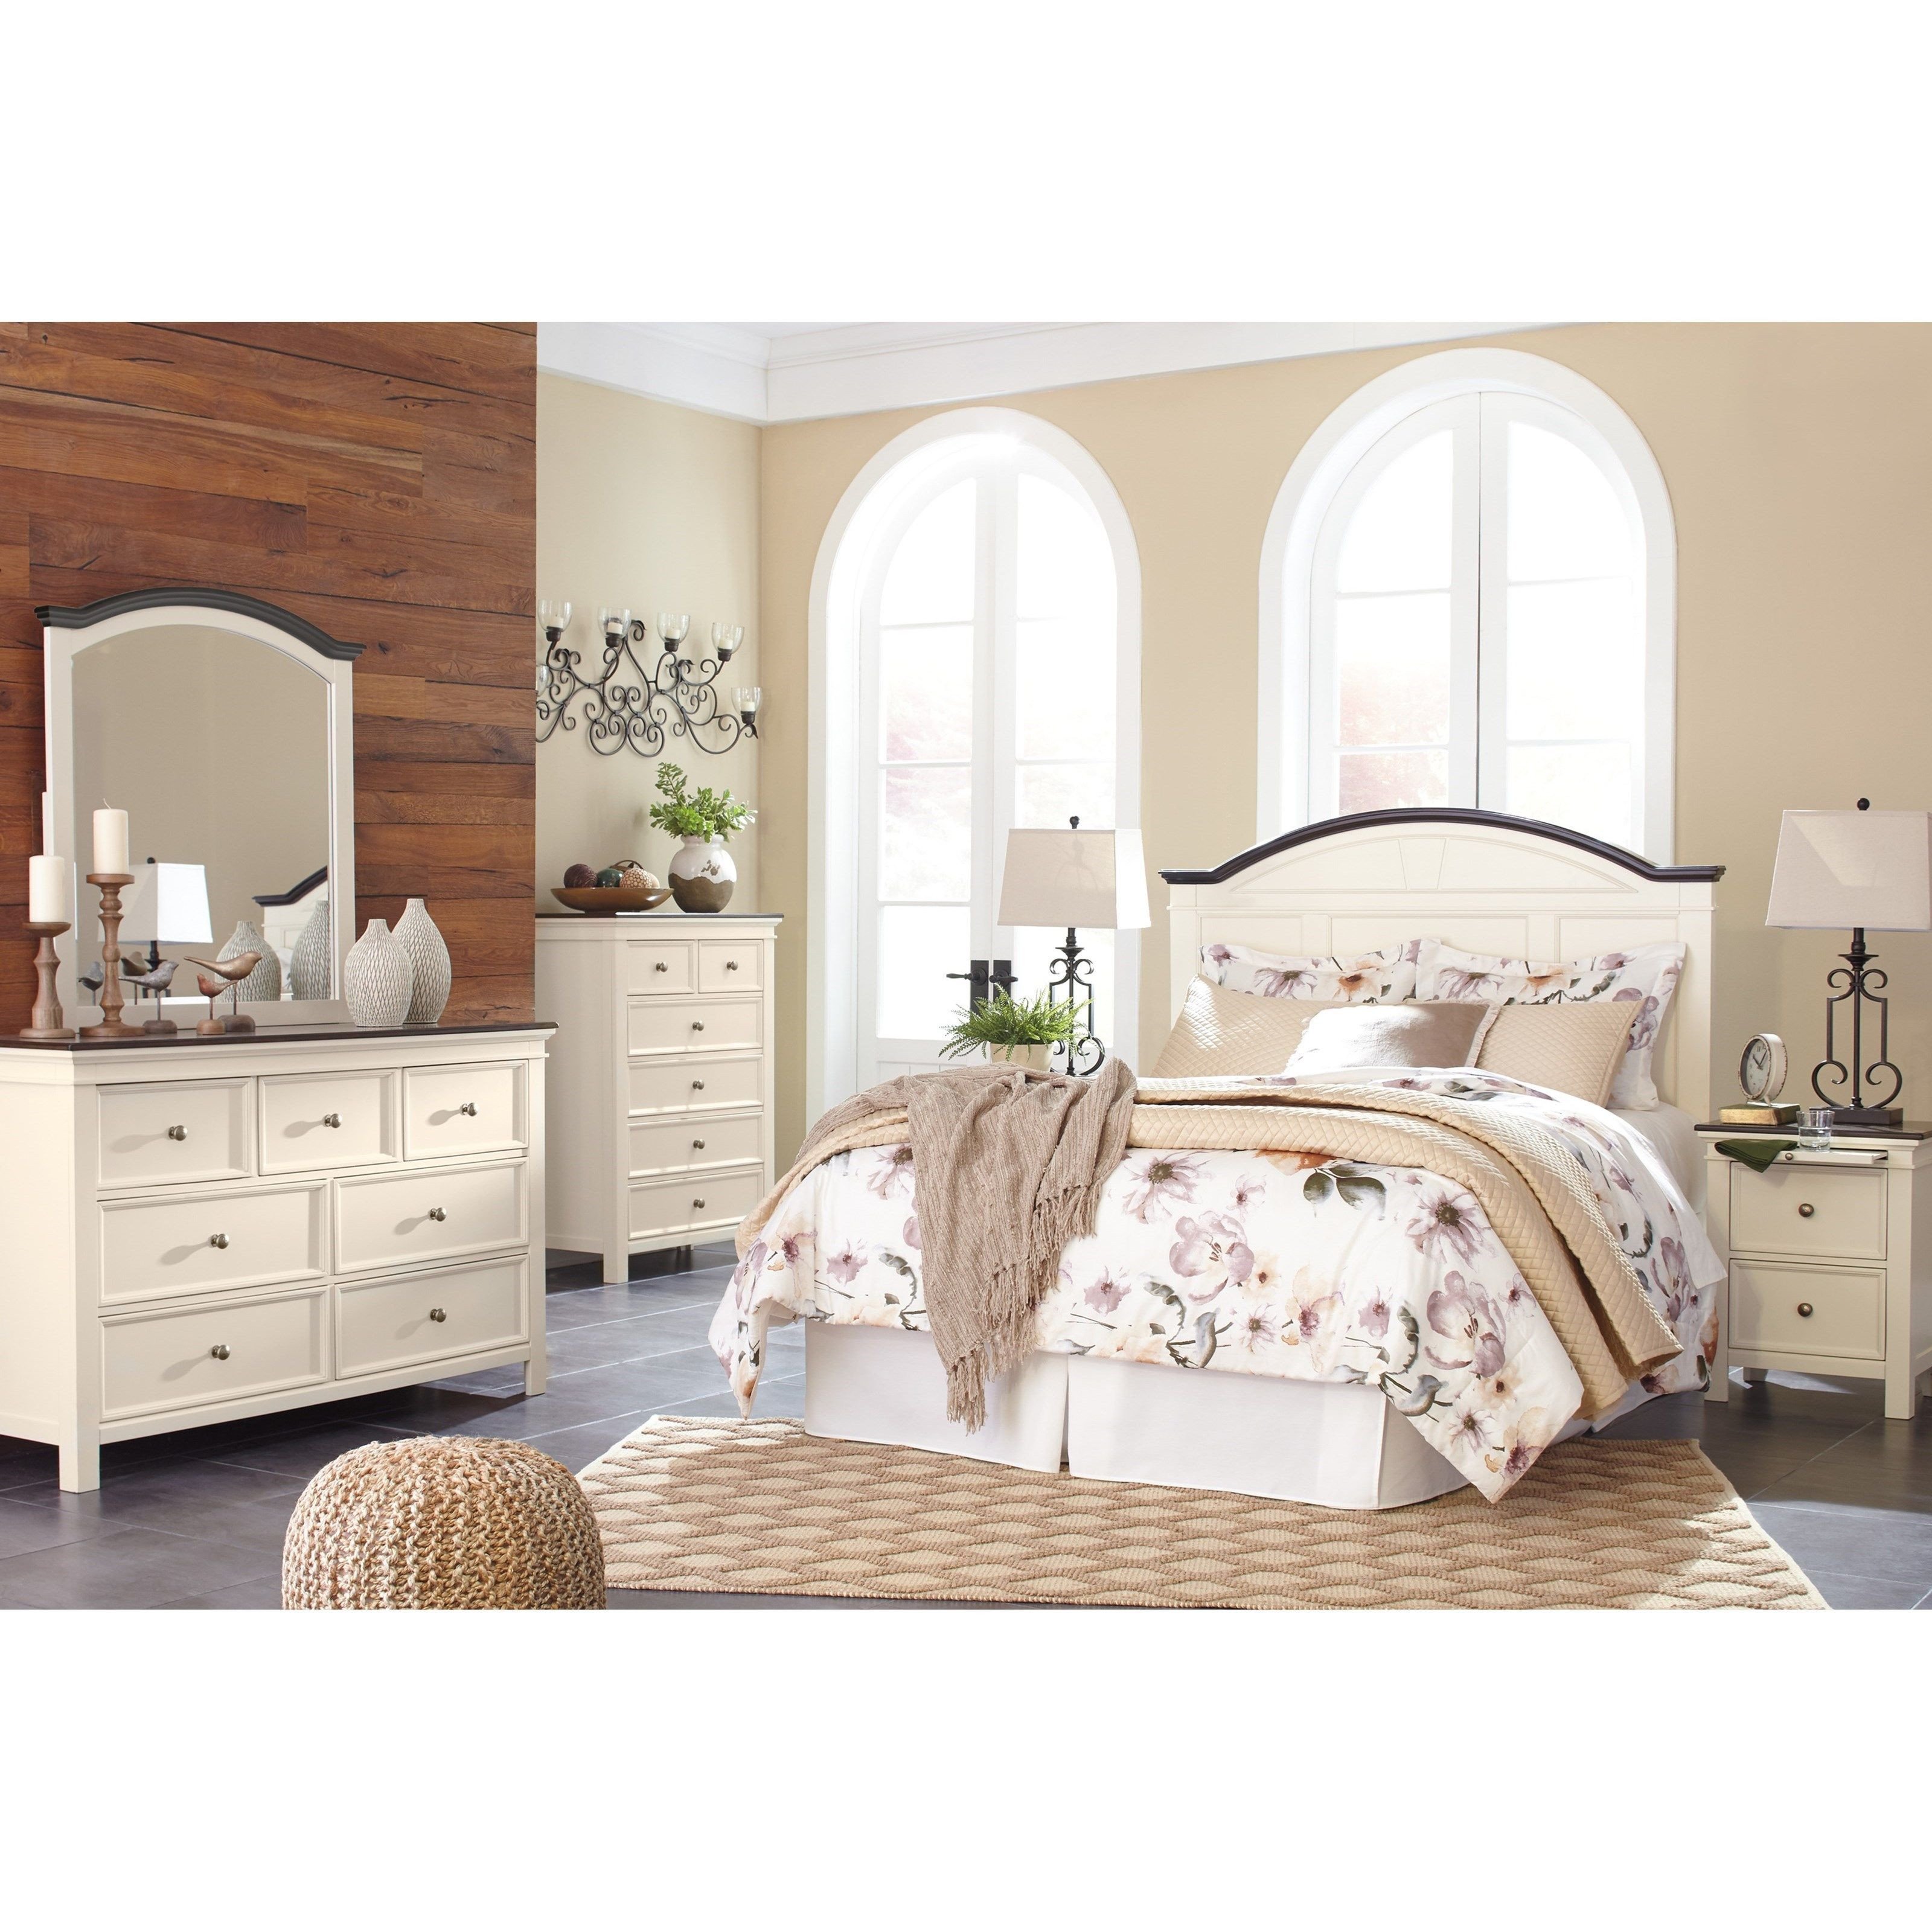 White Bedroom Set Queen Inspirational Woodanville Queen Bedroom Group by Signature Design by